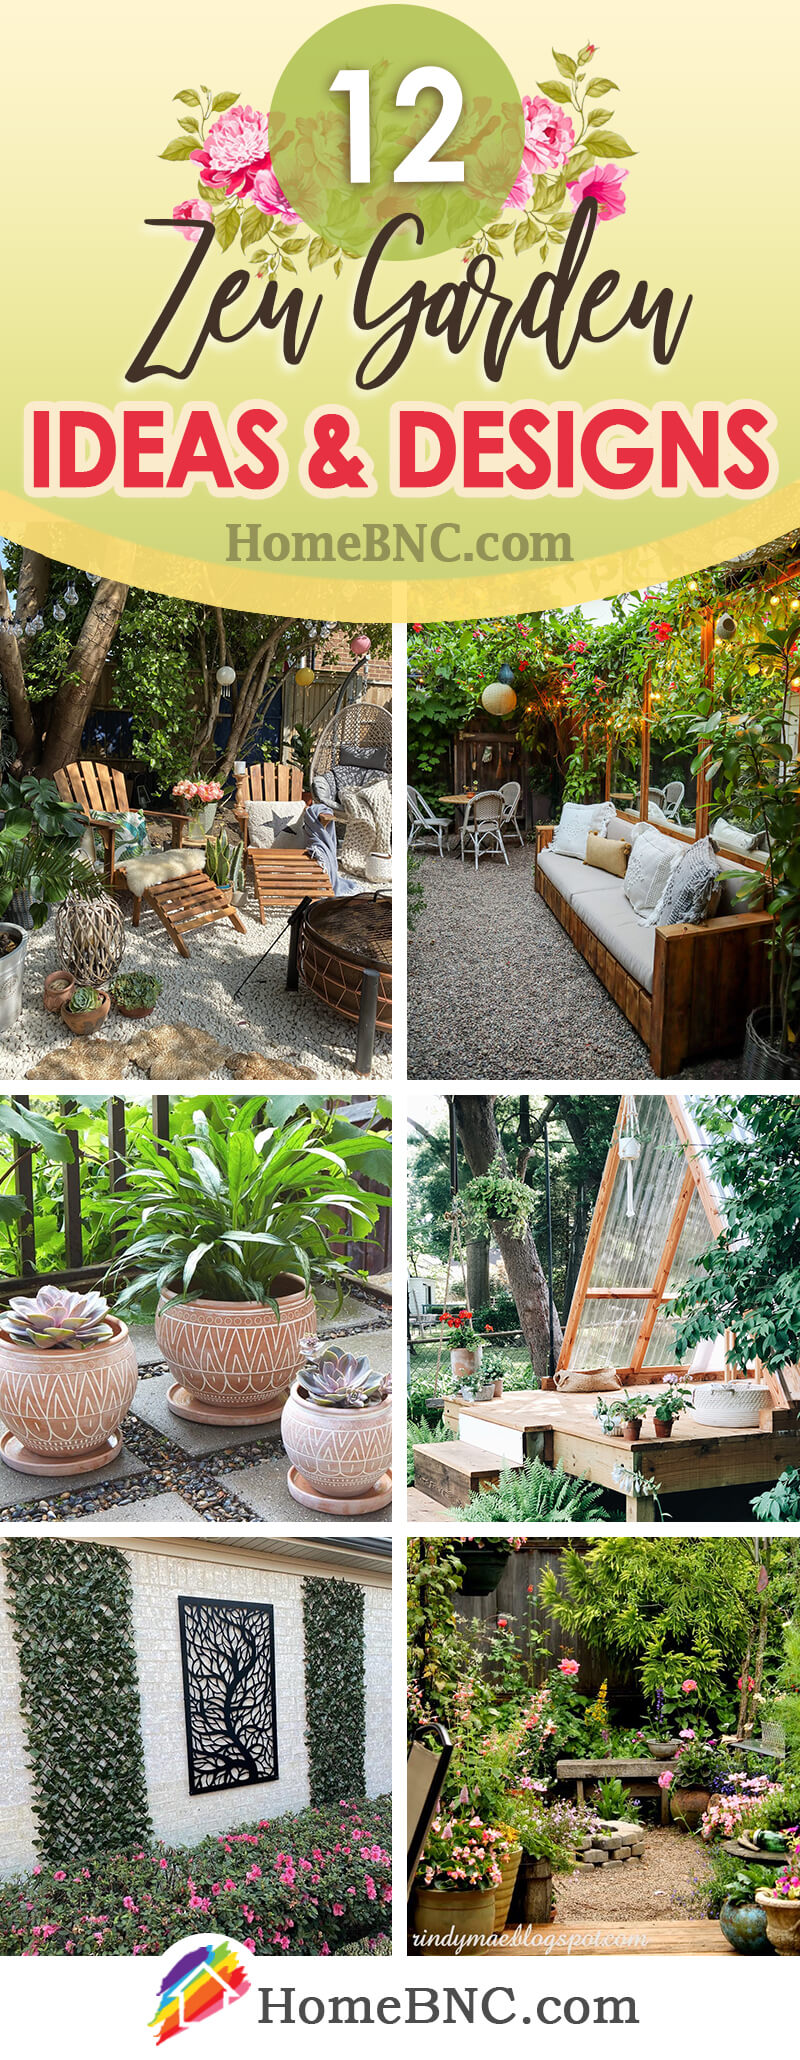 Tranquil Oasis: Zen Garden Design